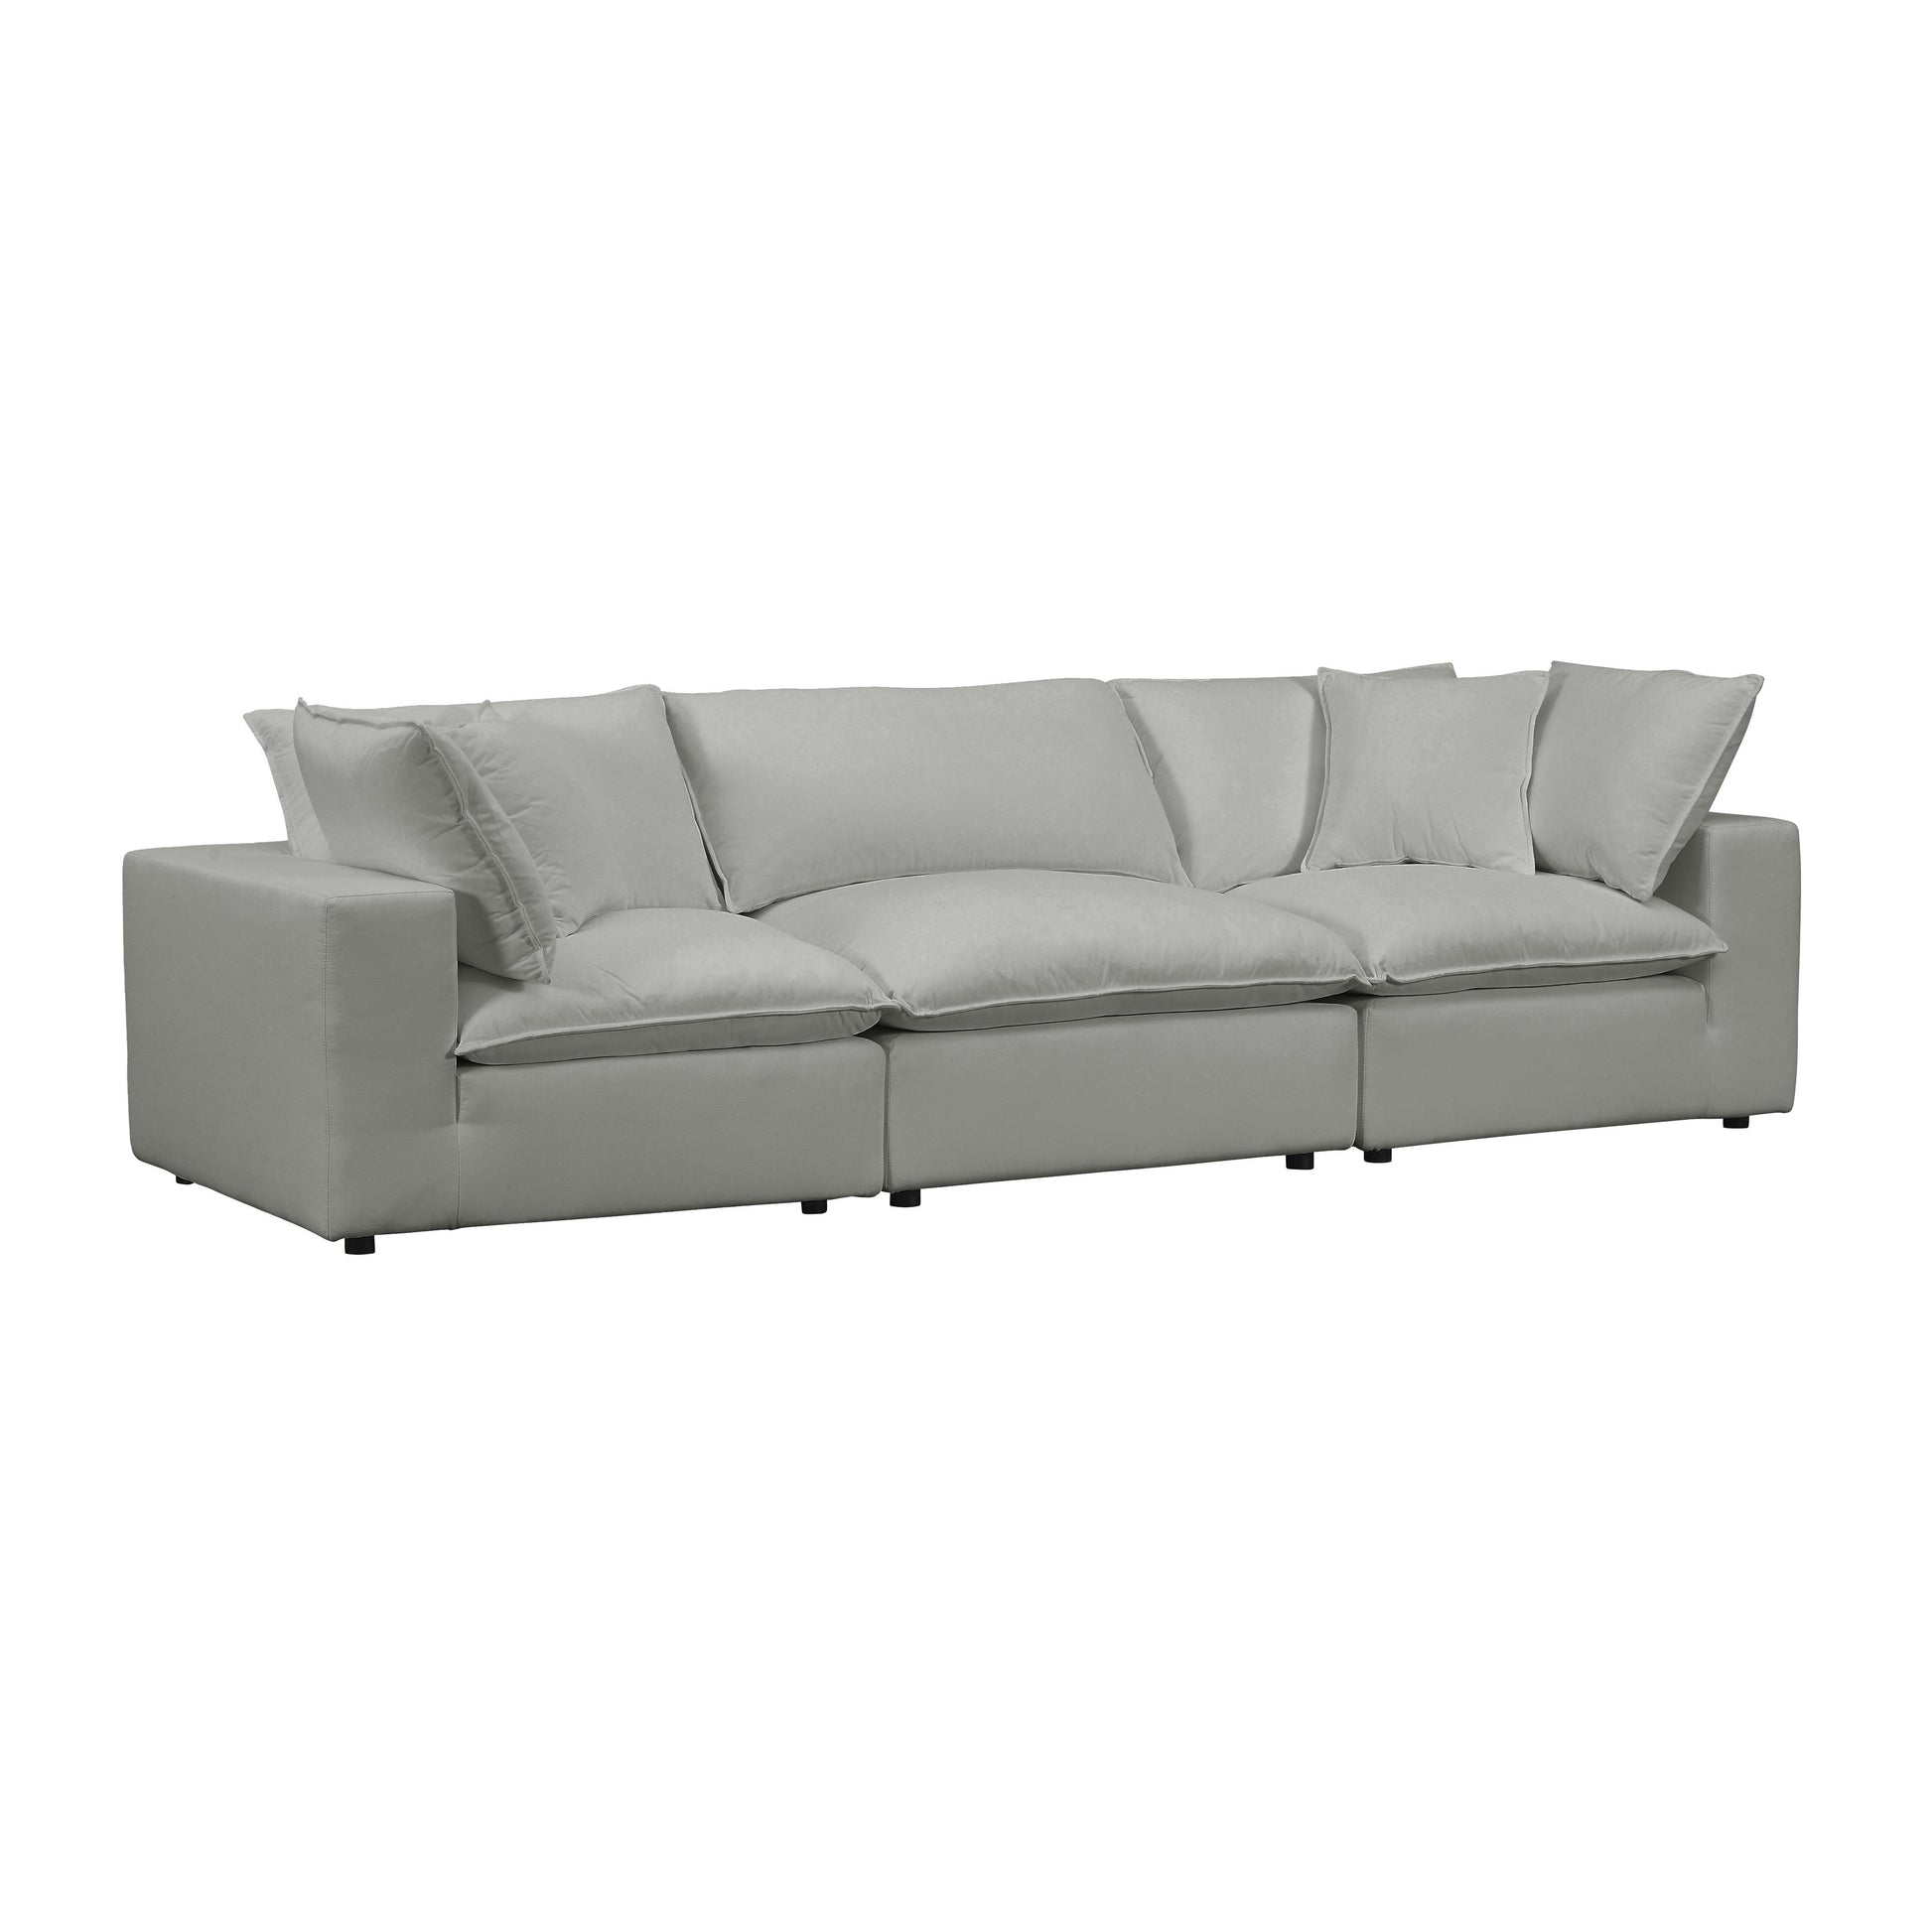 Tov Furniture Cali Slate Modular Sofa